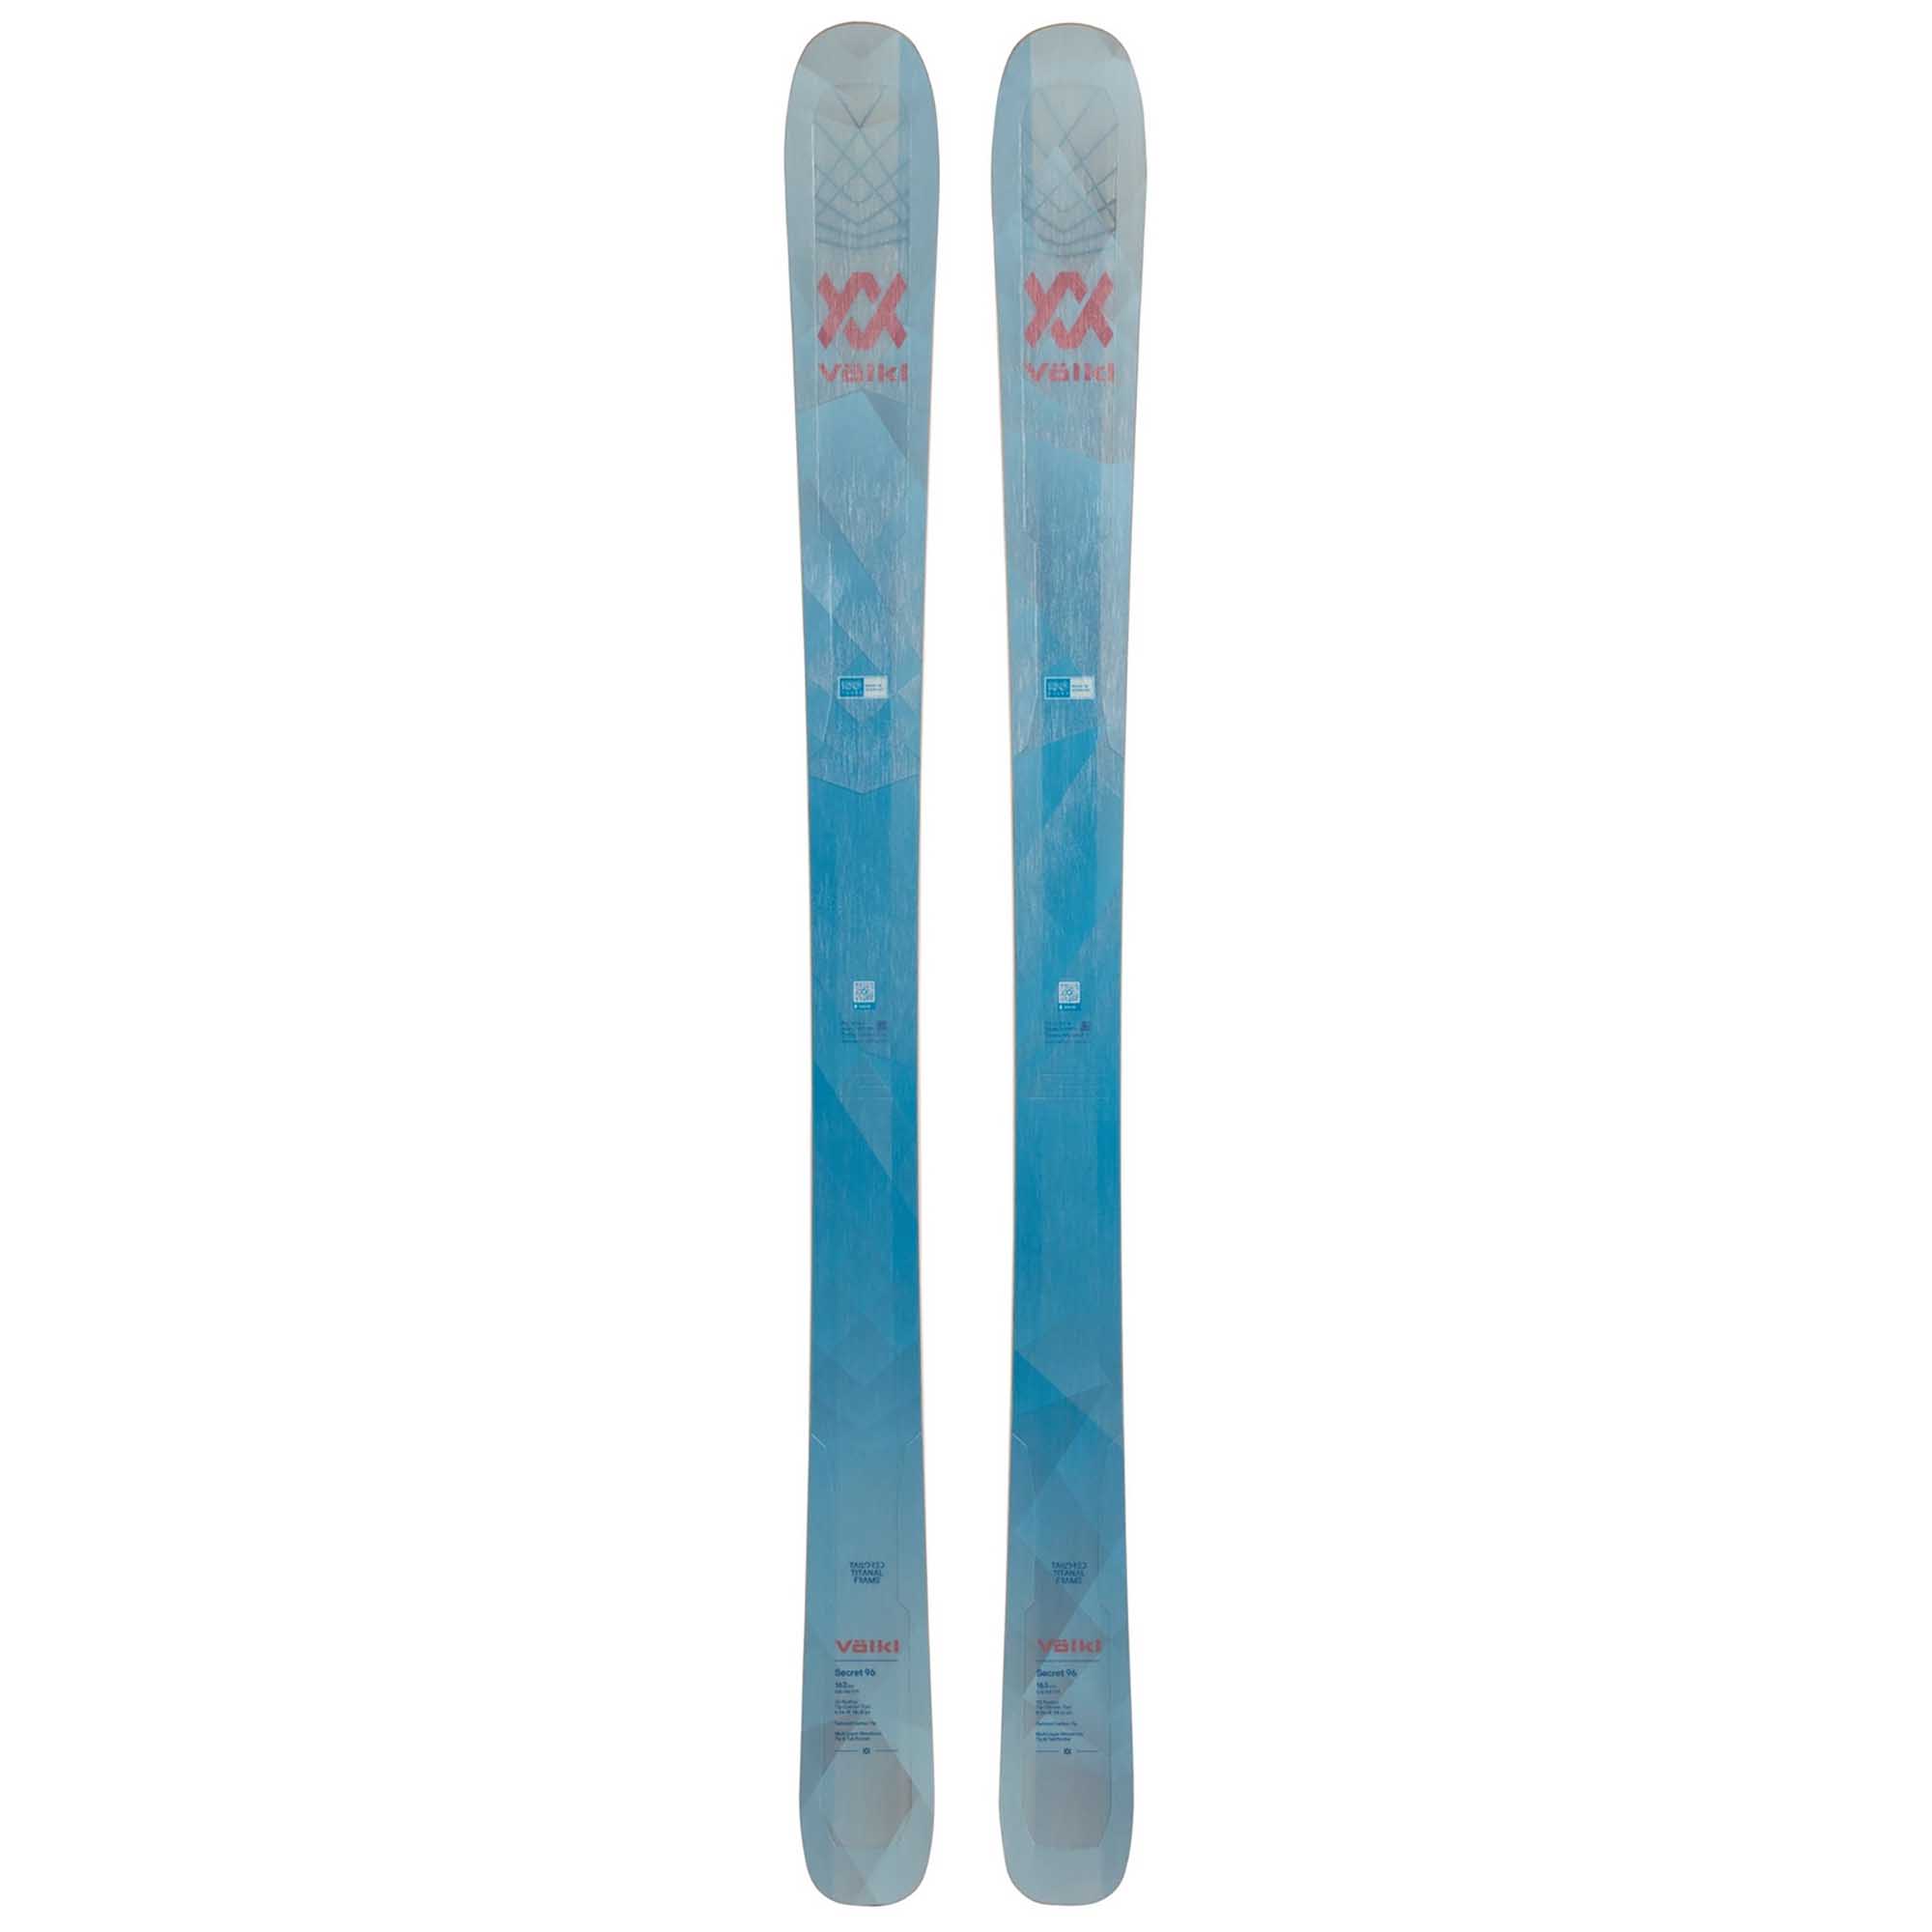 Volkl Secret 96 Women's Flat Skis